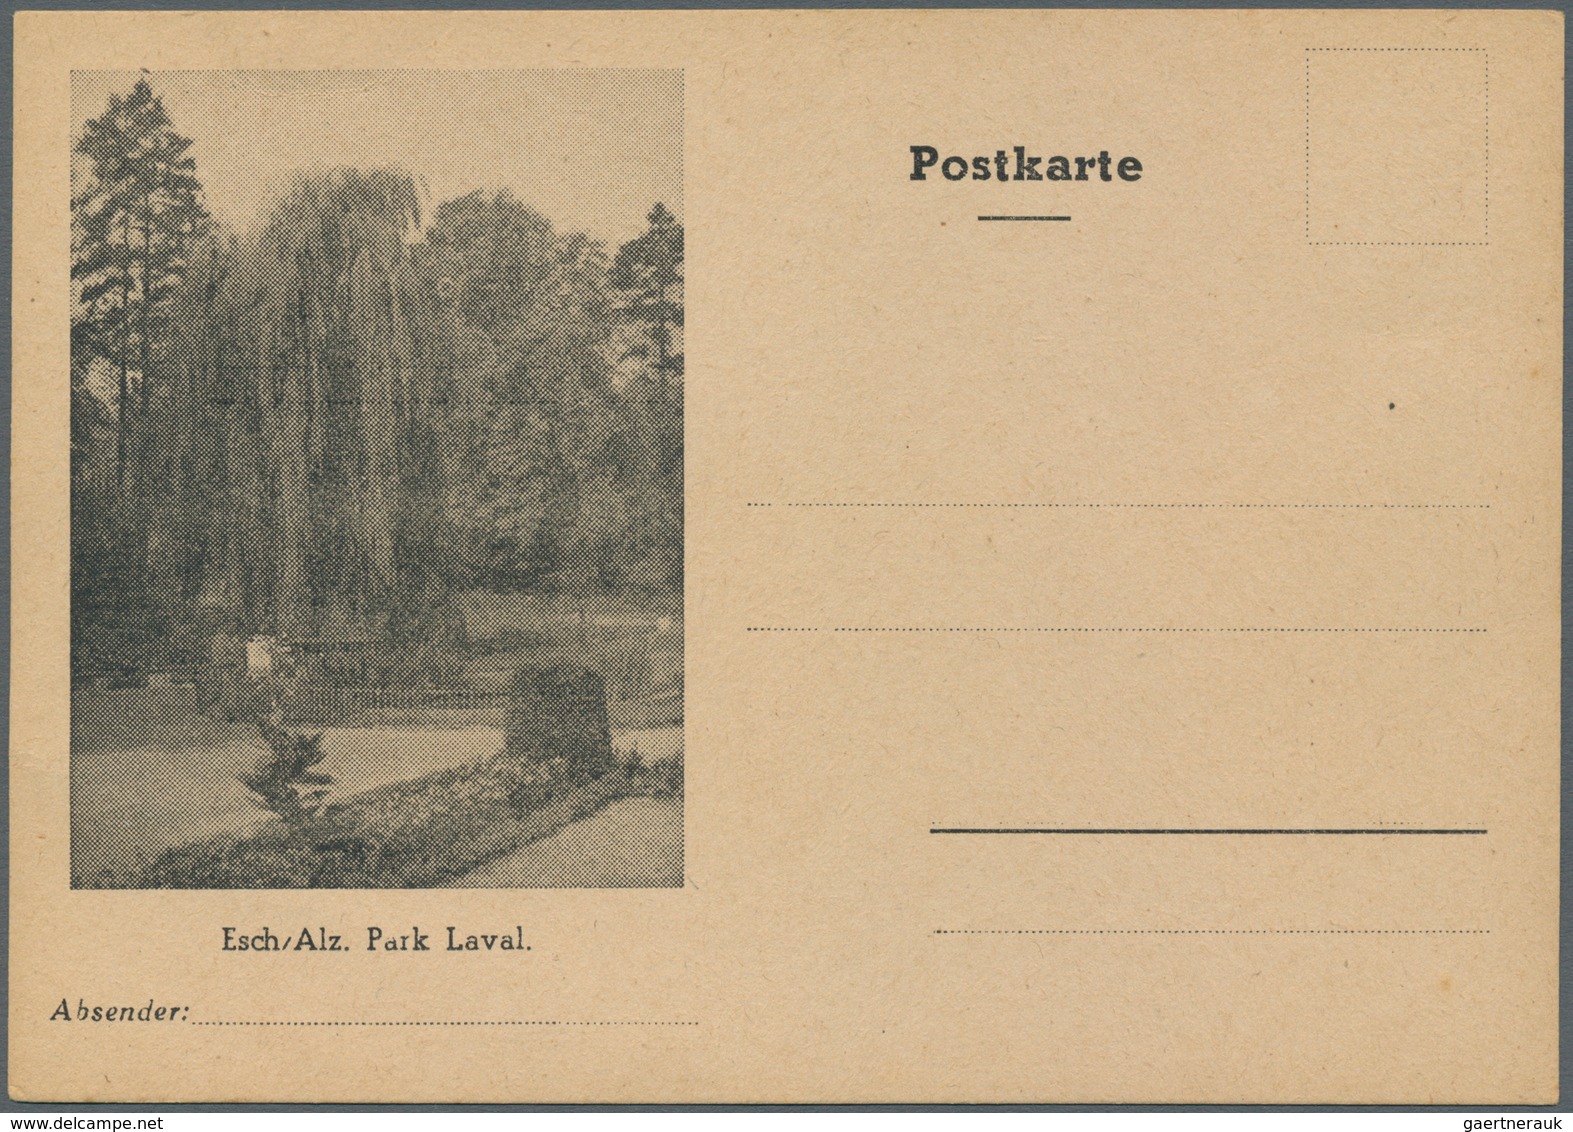 15155 Luxemburg - Ganzsachen: 1940 (ca.), Essay Picture Card Without Value Stamp, Five Cards With Differen - Ganzsachen